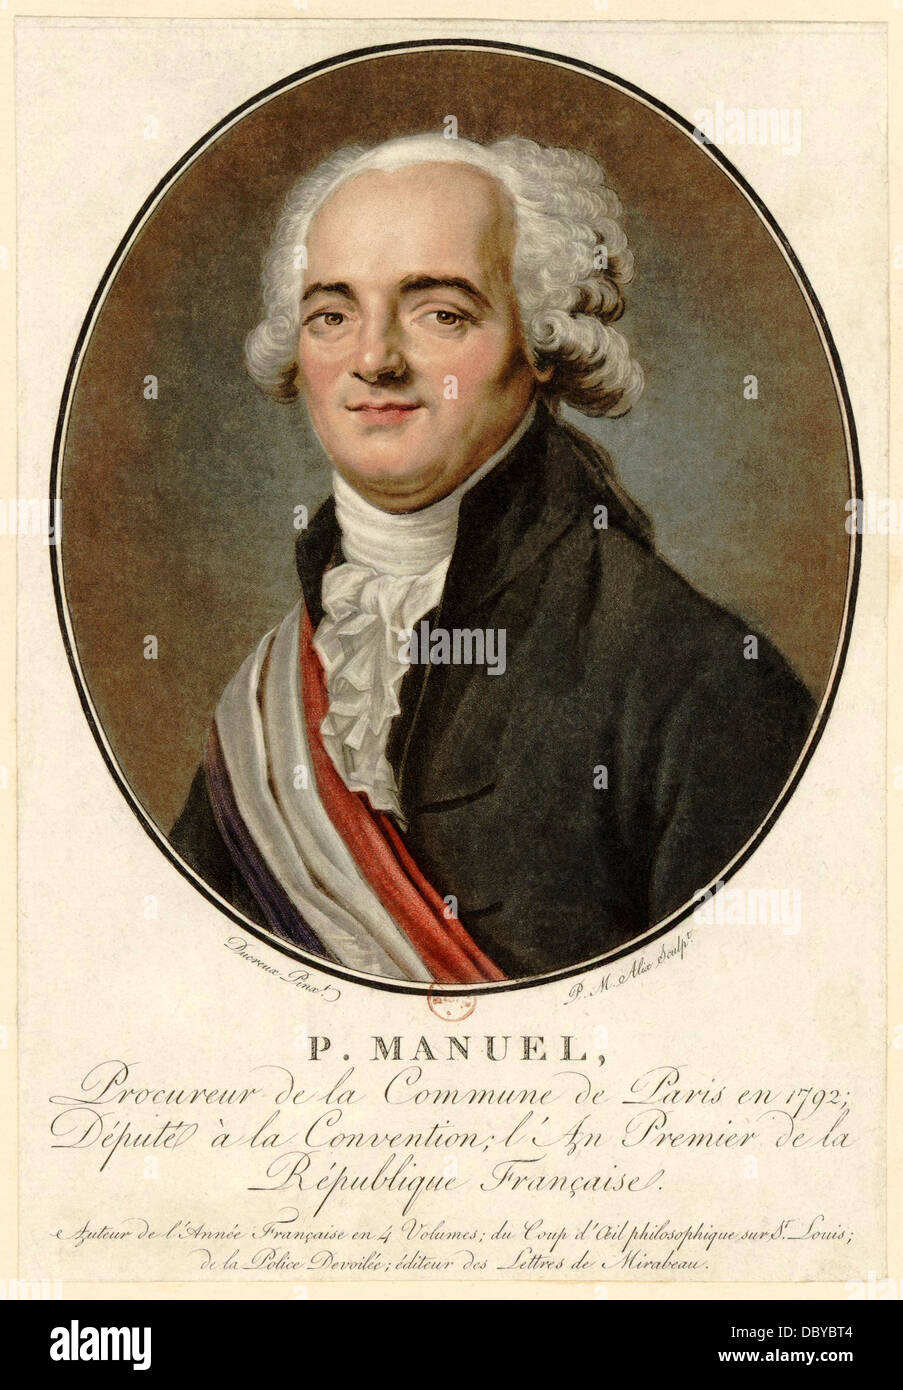 Pierre Louis Manuel (1751 - 1793), rivoluzionario francese. Foto Stock